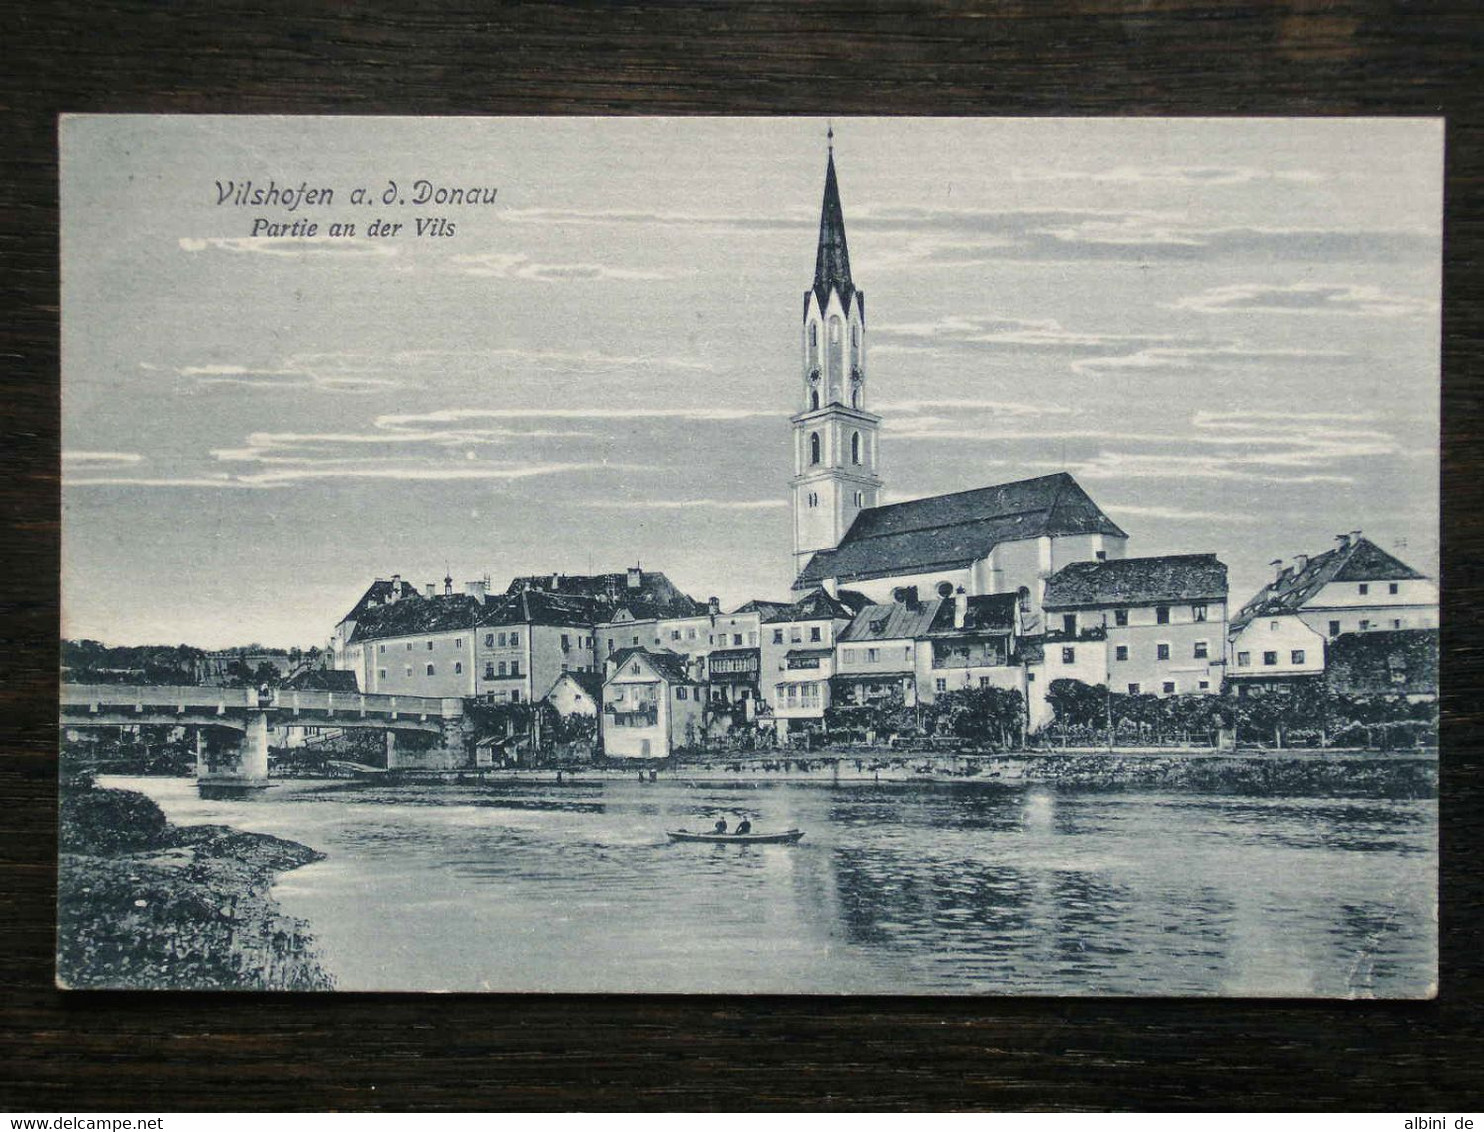 251 - AK VILSHOFEN An Der Donau - Partie An Der Vils - LK Passau - 1913 - Vilshofen